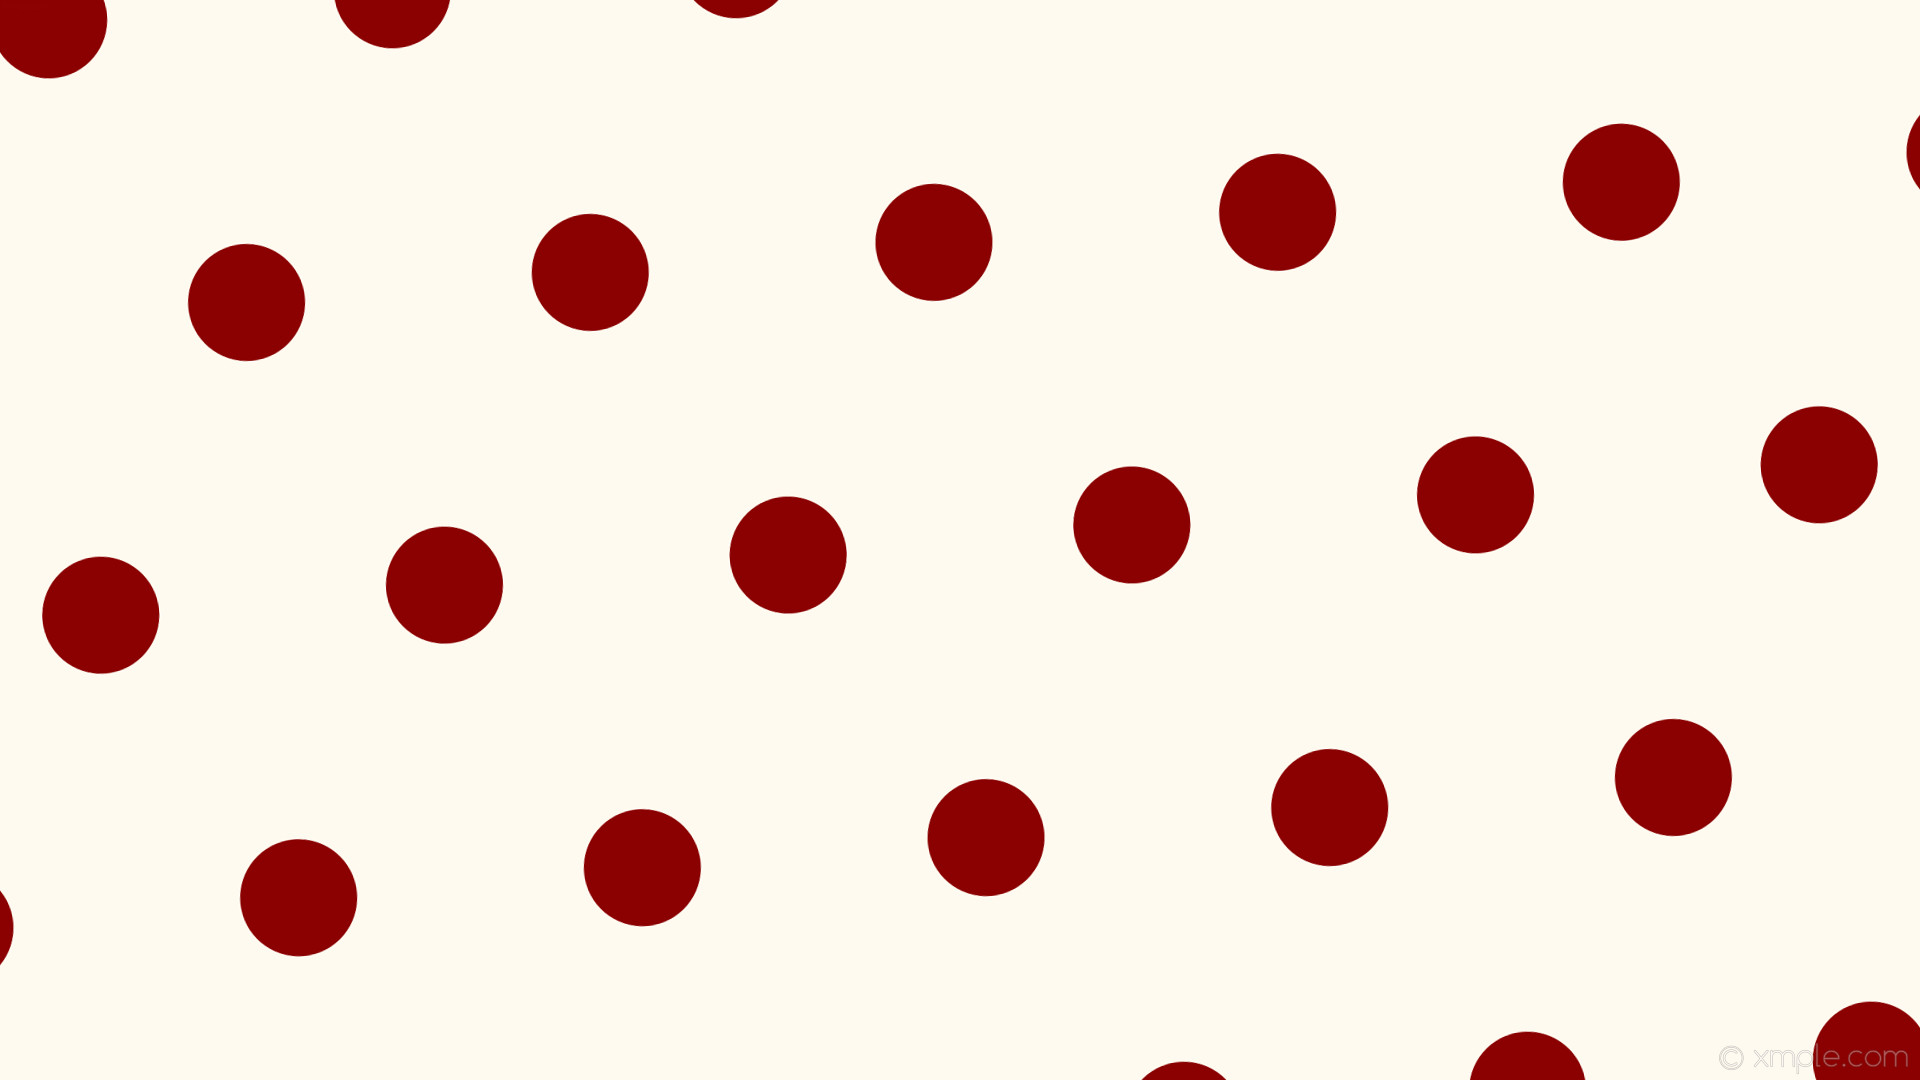 Wallpaper hexagon red polka white dots floral white dark red #fffaf0 b0000 diagonal 5